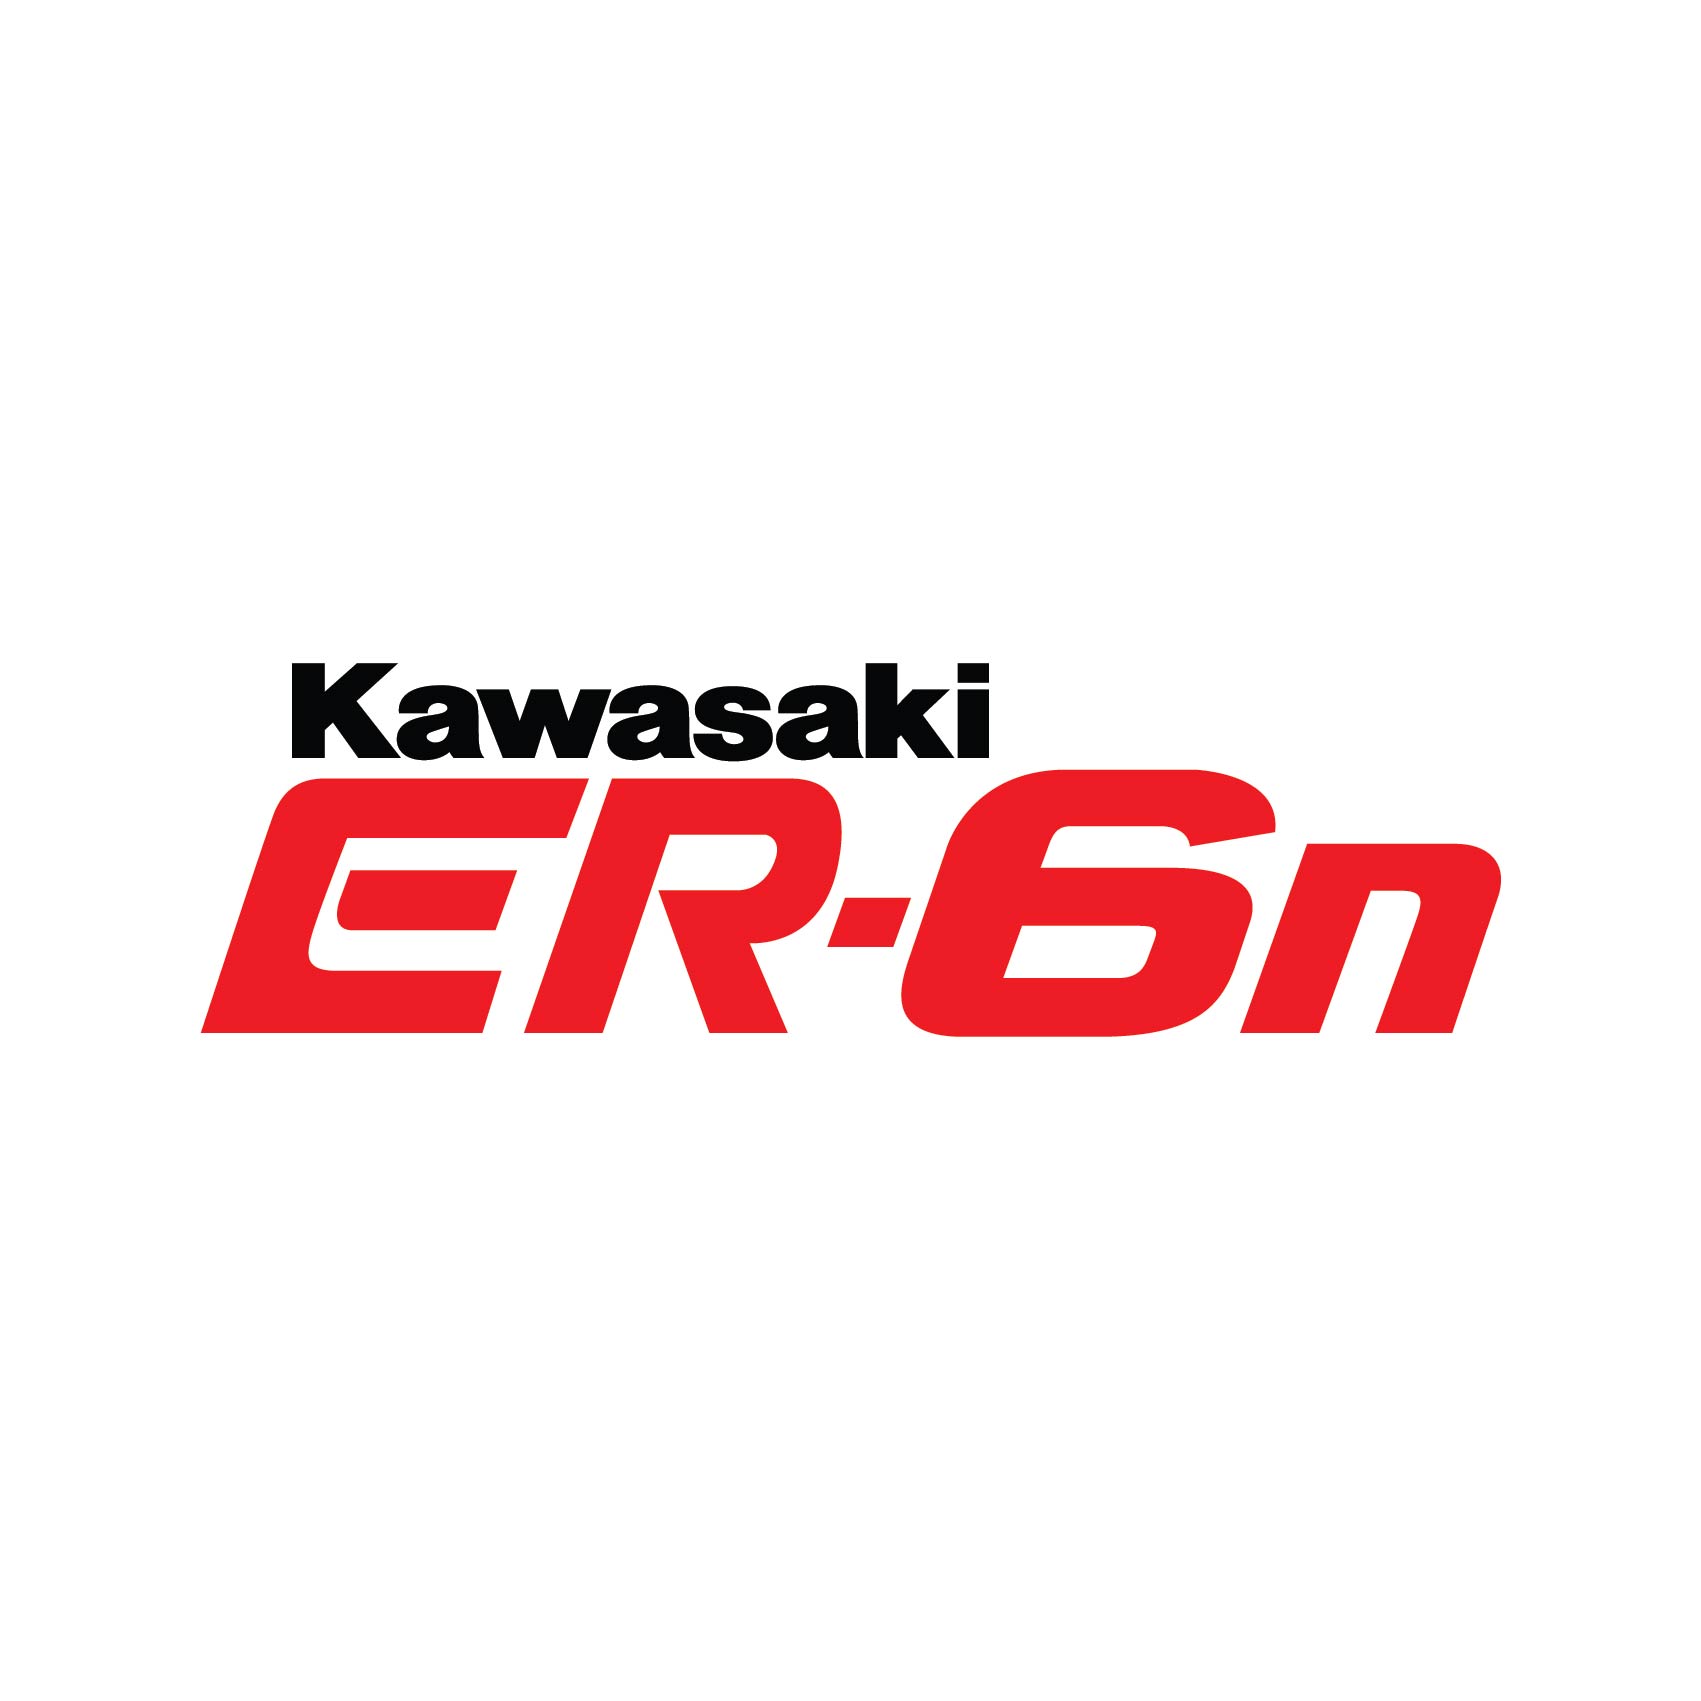 stickers-kawasaki-er-6n-logo-ref61kawasaki-autocollant-kawasaki-moto-sticker-pour-moto-sport